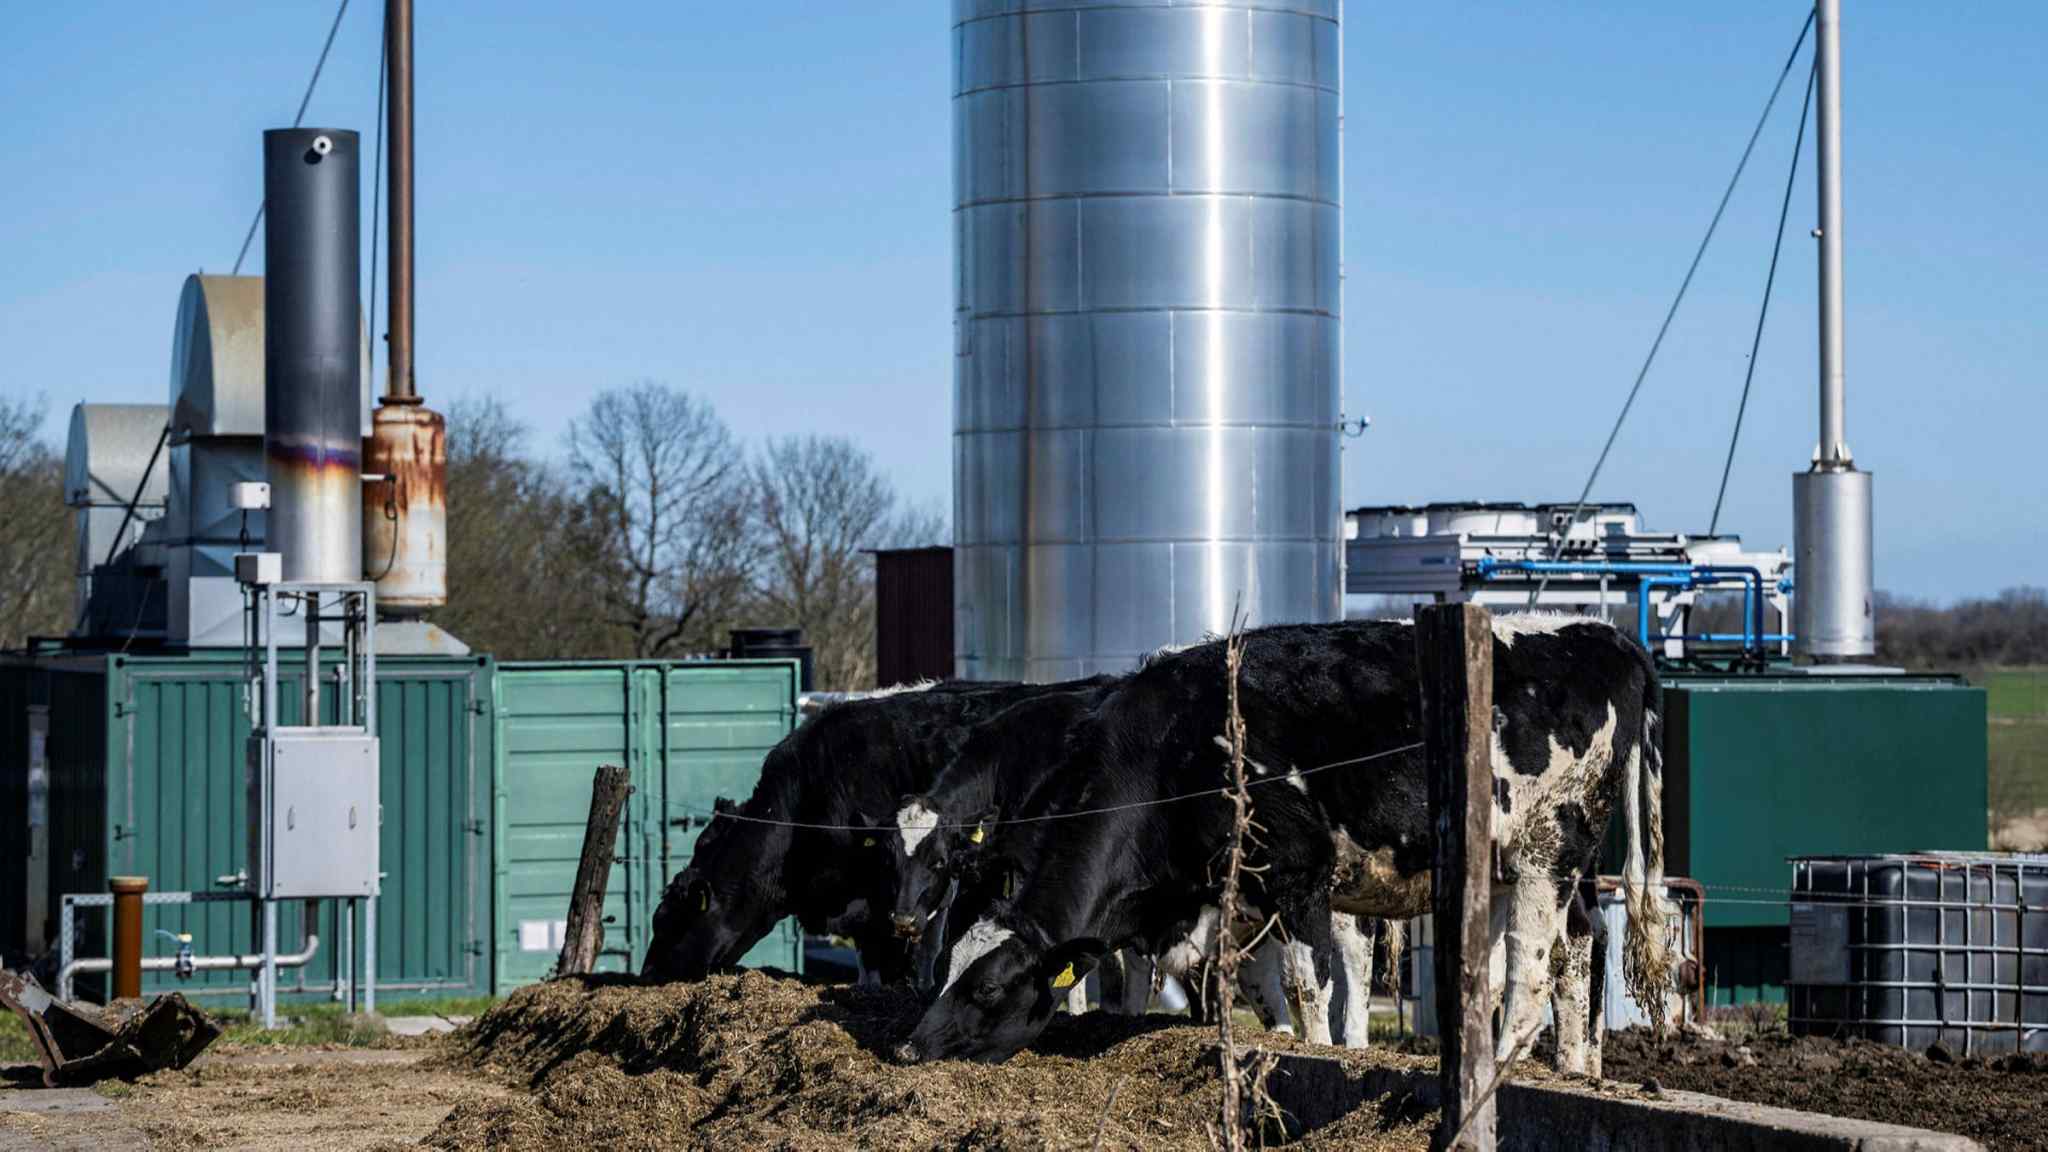 Europe’s biggest biogas producer warns EU targets unachievable